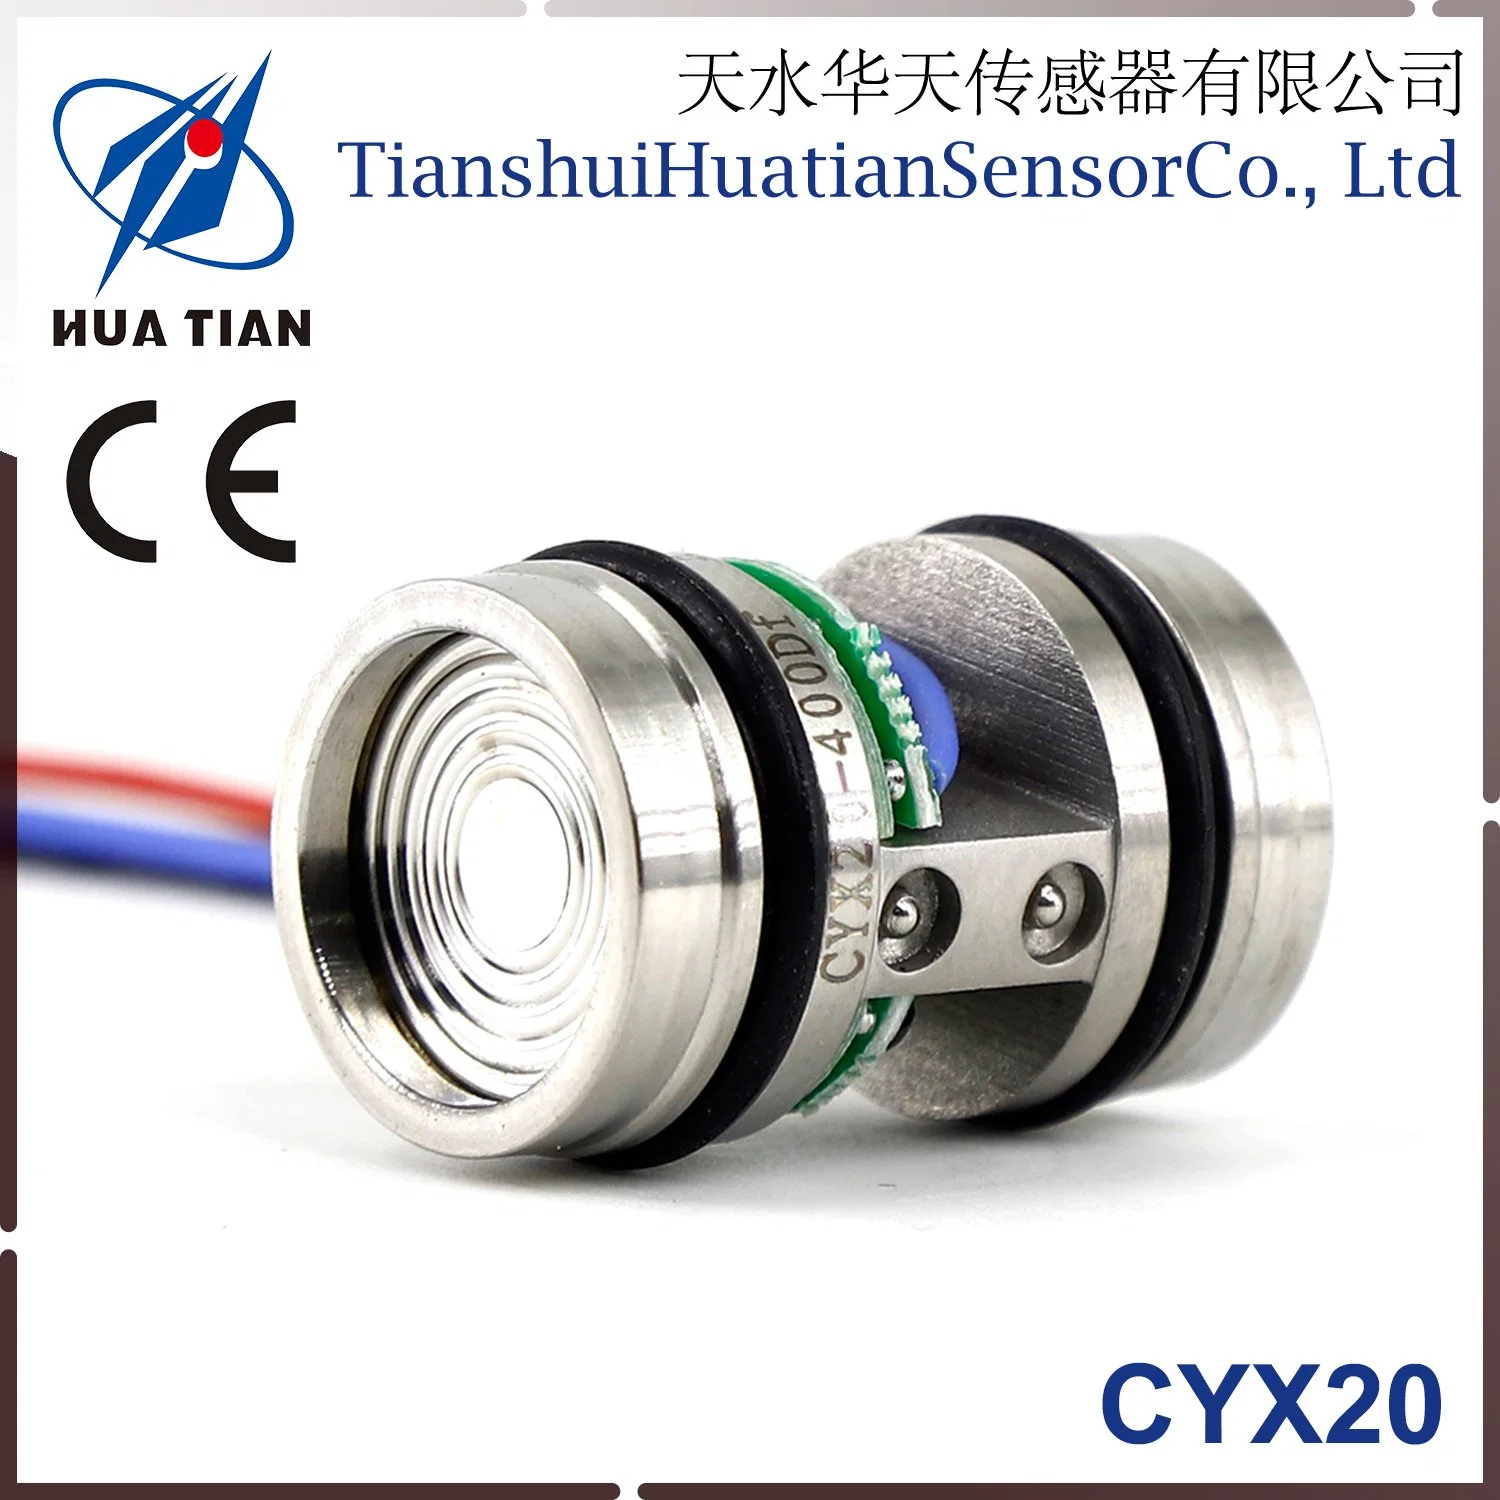 Cyx-20 Silicon Oil Filled Differential Piezoresistive Pressure Sensor